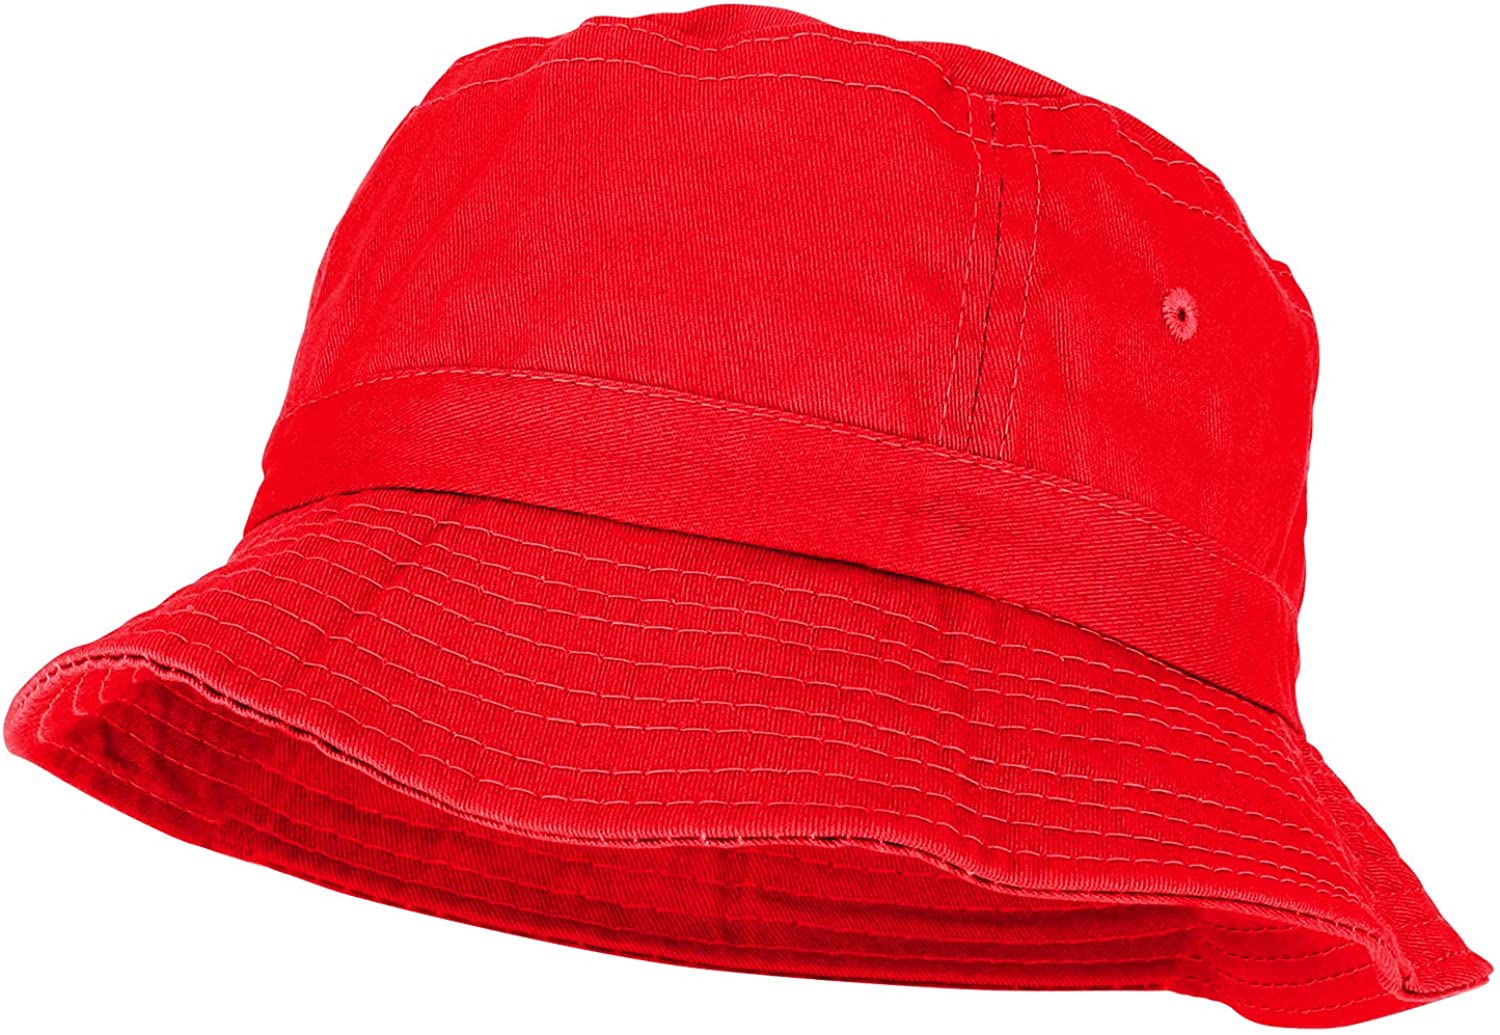 Armycrew Unlimited Pigment Dyed Washed 100% Cotton Unisex Bucket Hat - Indigo